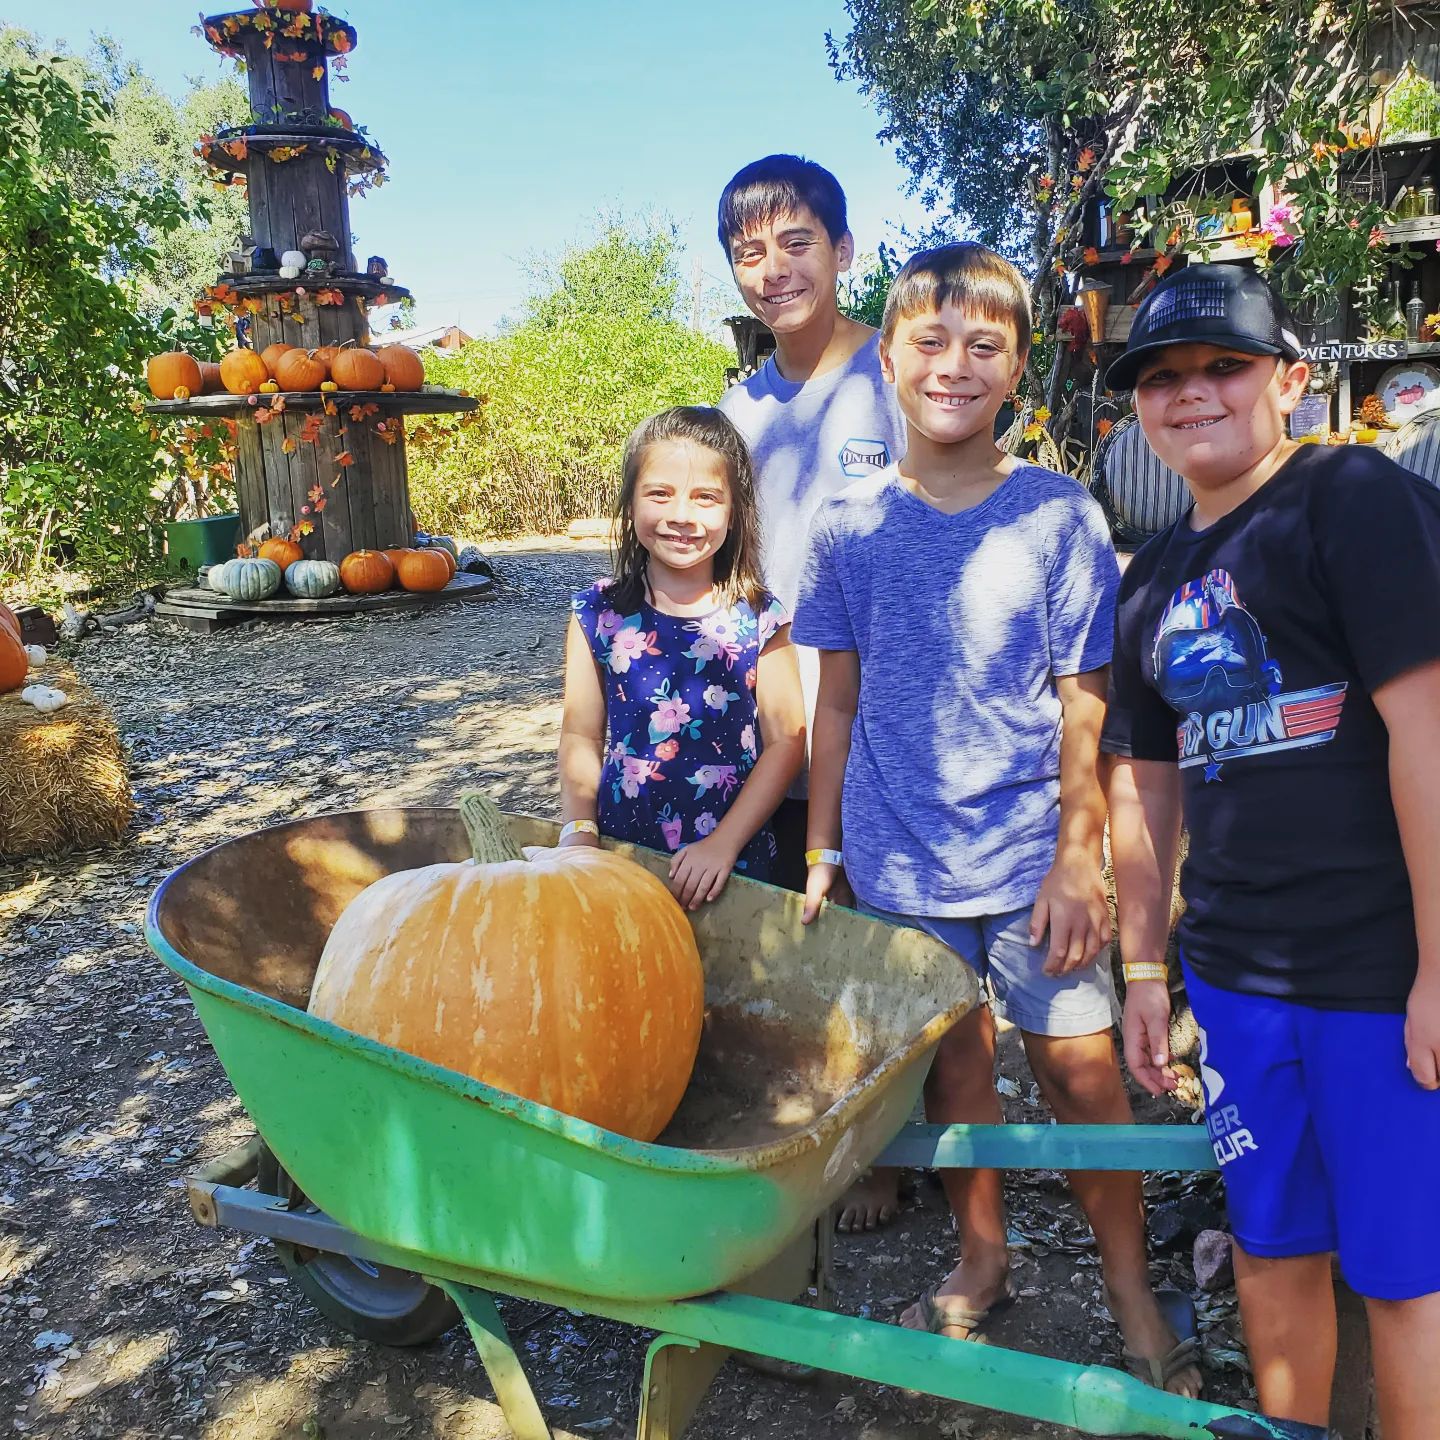 Kids with a pumpkin in a wheel barrel photo